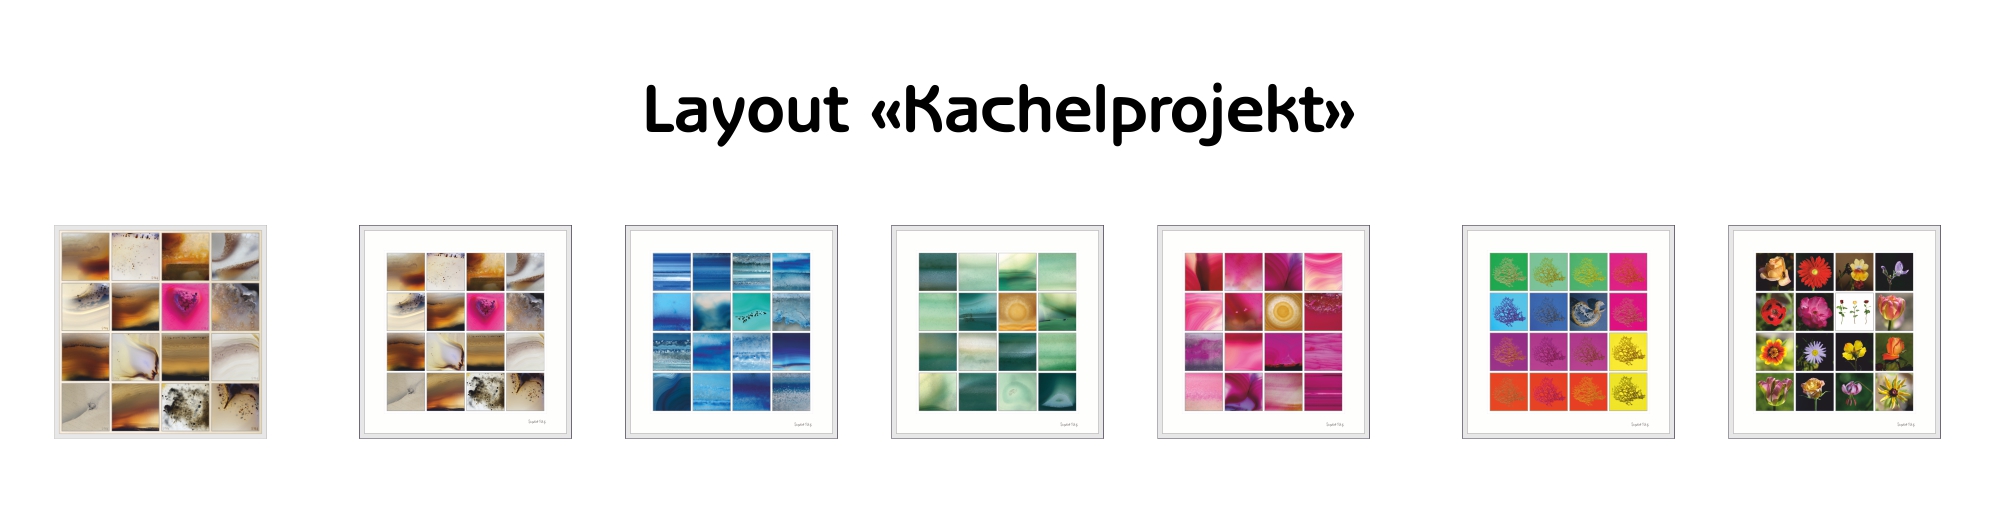 image-12141197-Kachelprojekt-45c48.jpg